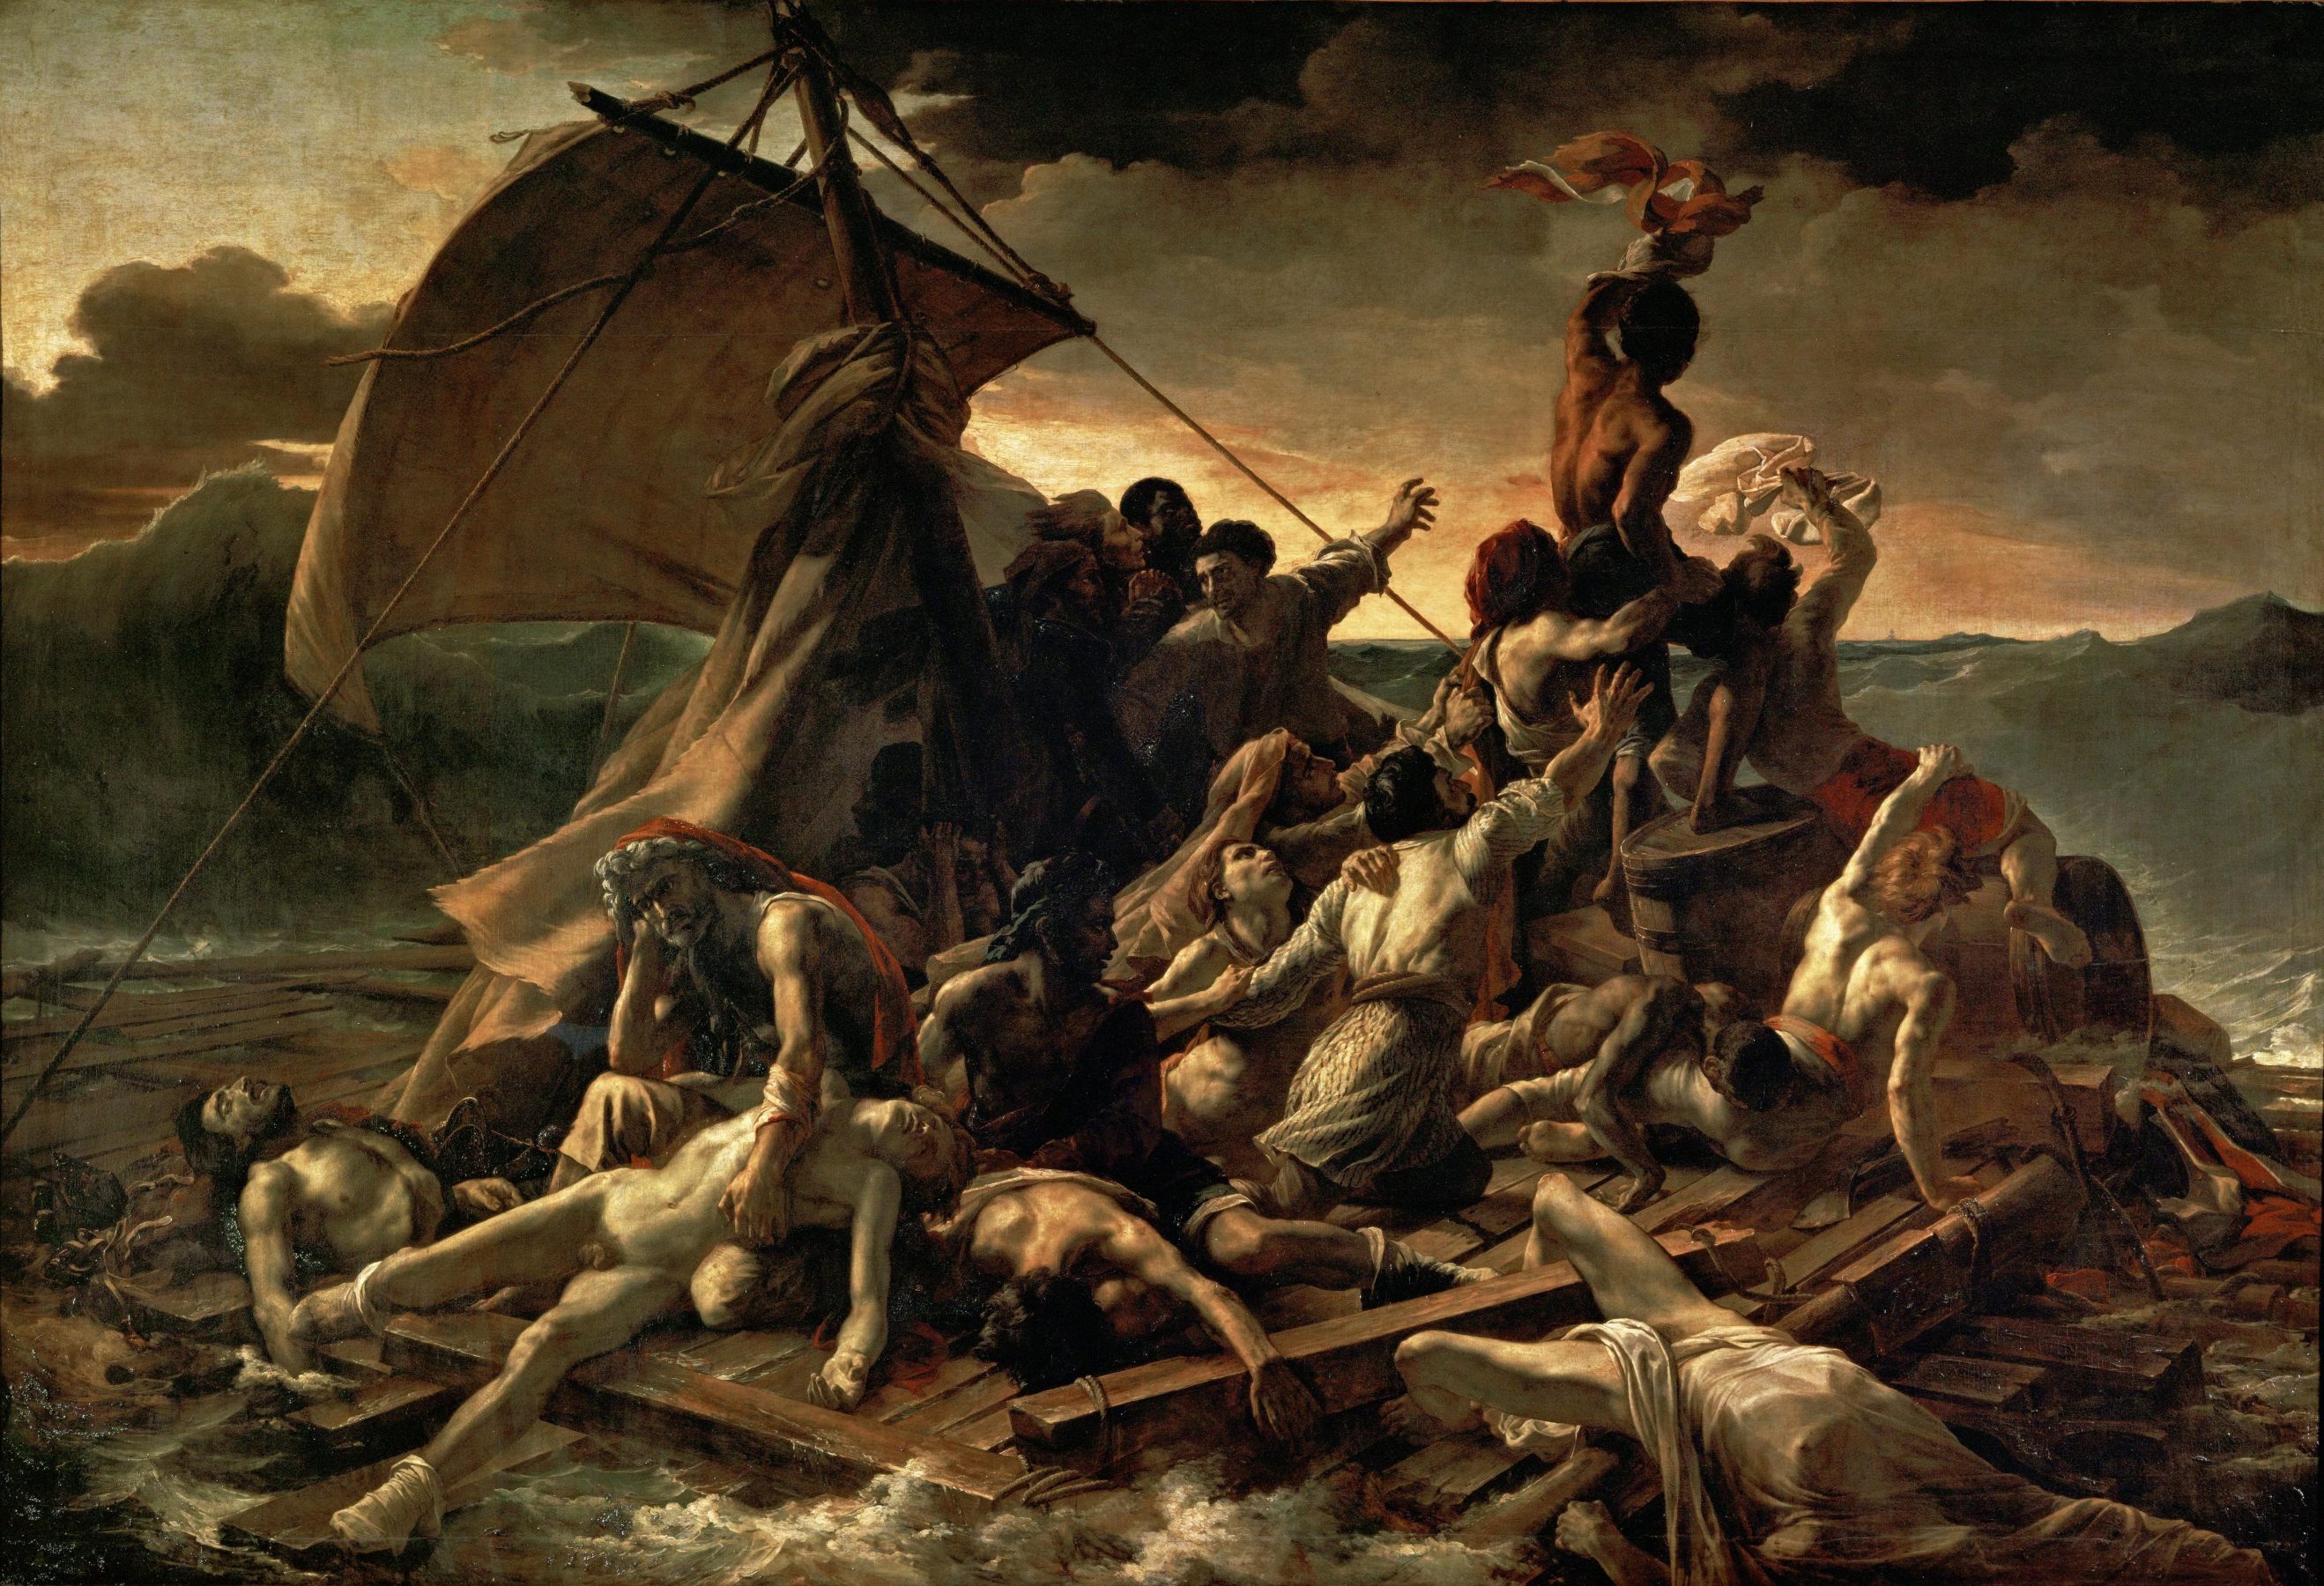 Théodore Géricault's painting The Raft of the Medusa